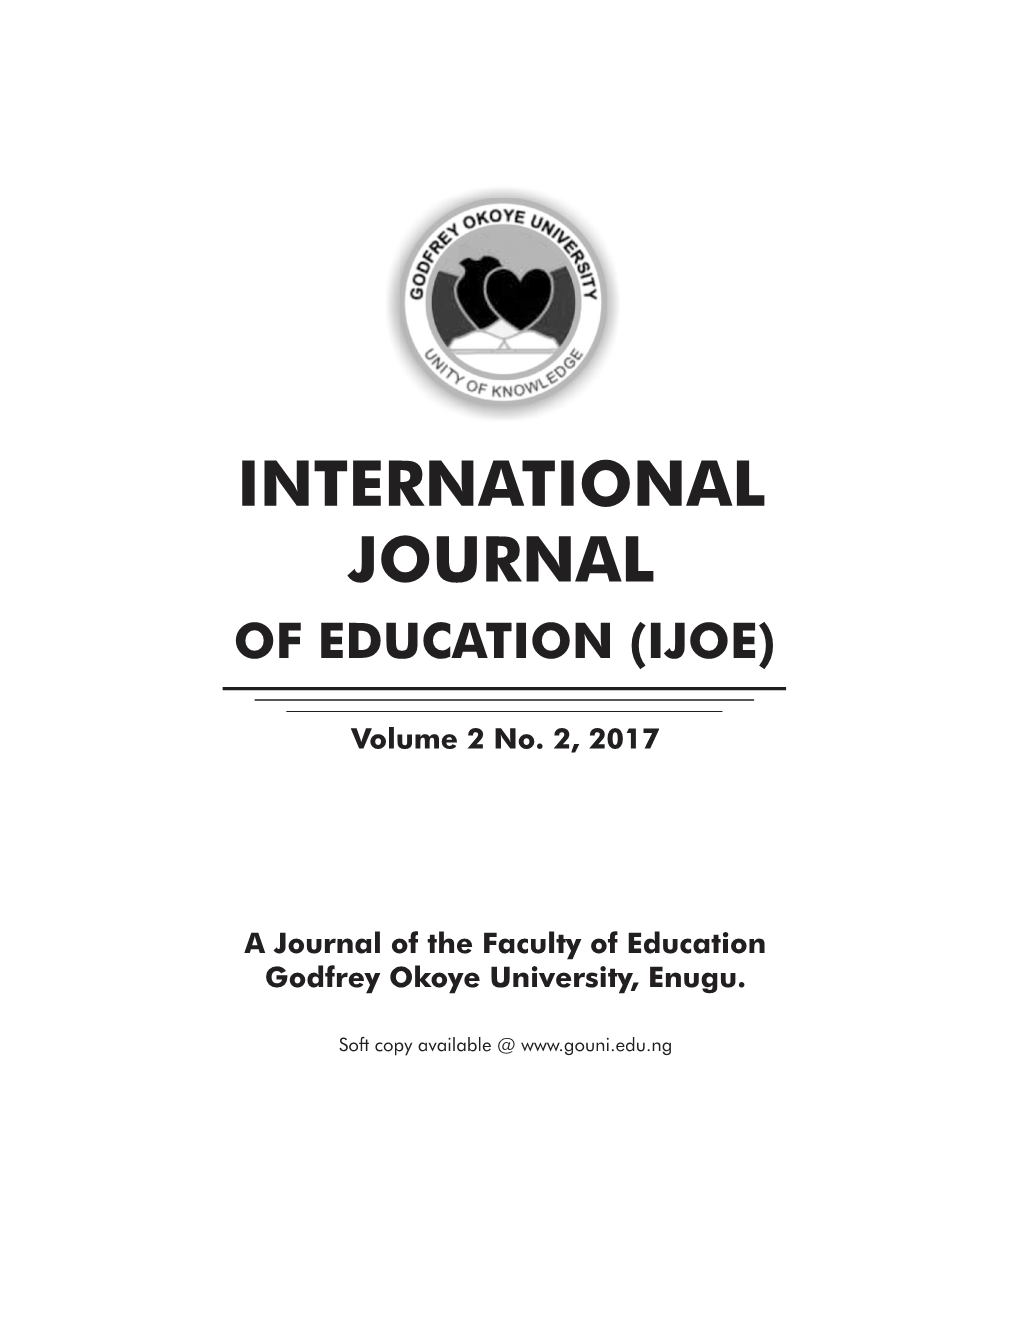 INTERNATIONAL JOURNAL of EDUCATION (IJOE) Volume 2 No.2, 2017